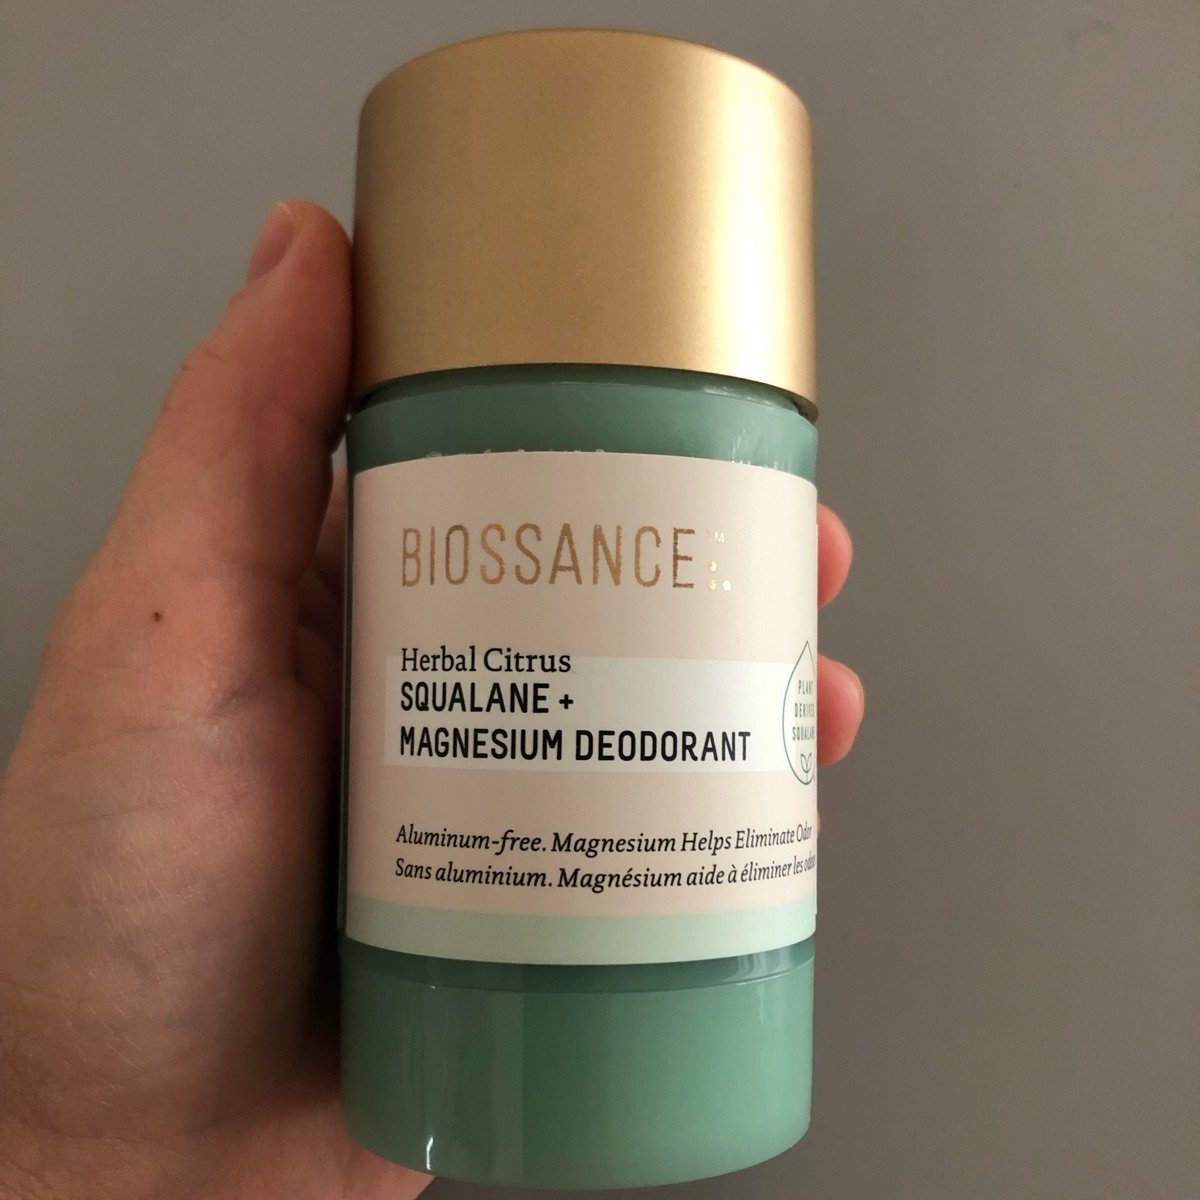 Biossance Desodorante Squalane + Magnesium Reviews | abillion